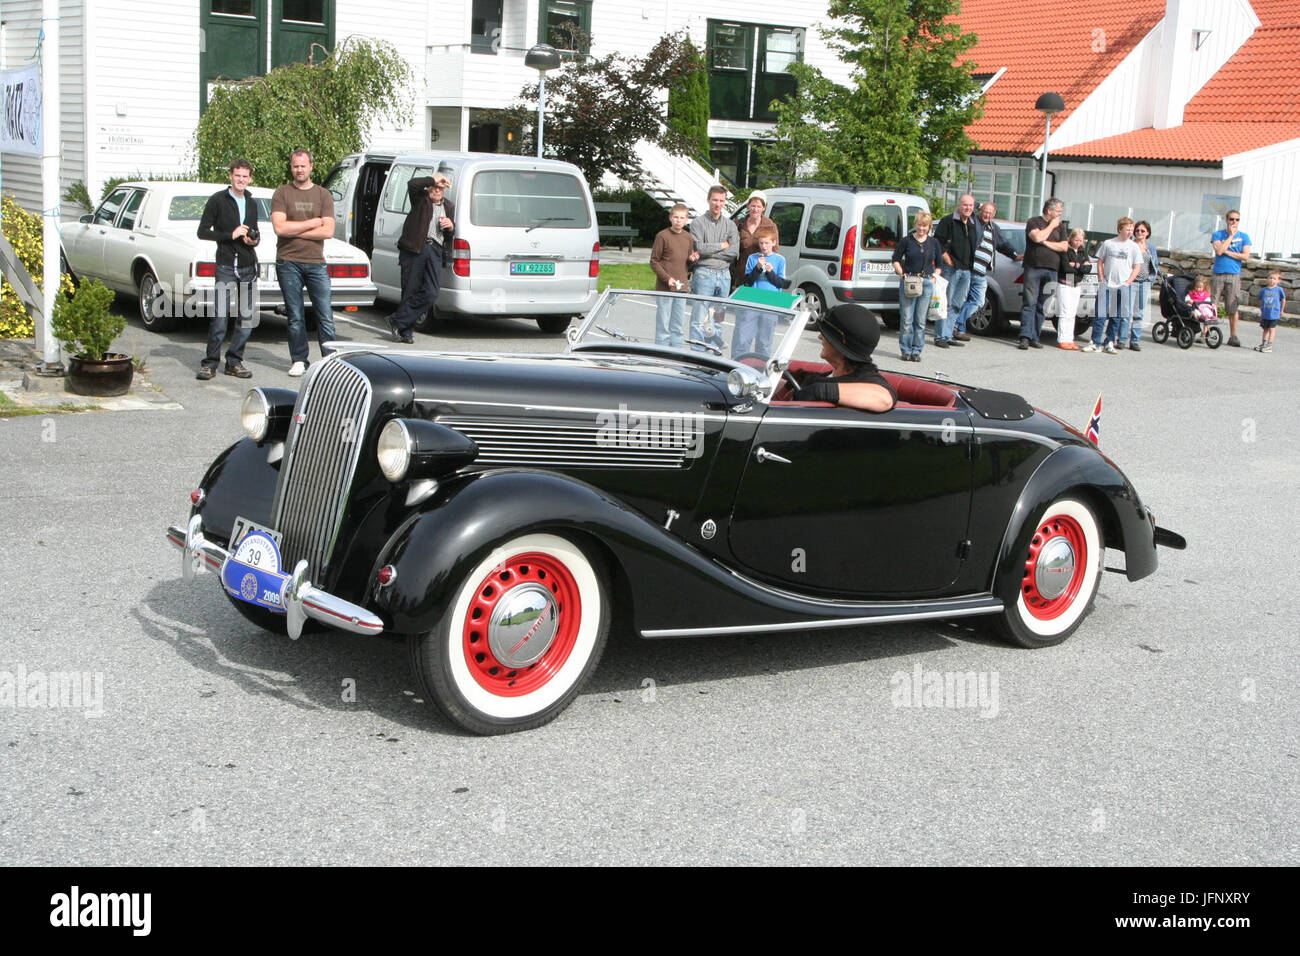 1937 Opel Gläser Super Six 2-türiges Cabriolet, Besitzer Sissel M Romslo  tadellos in passender Kleidung IMG 9336 Stockfotografie - Alamy